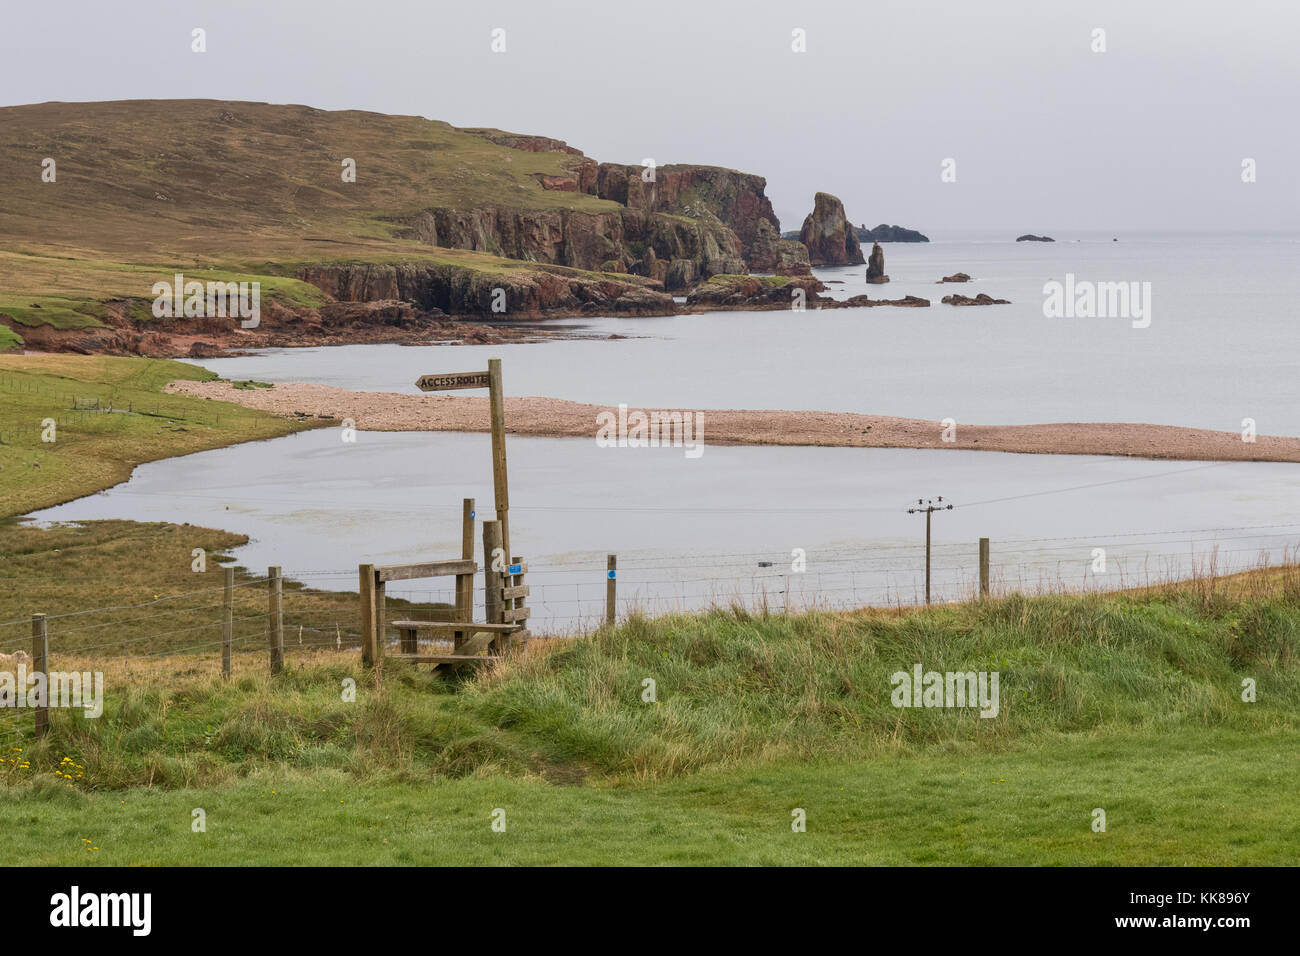 Wegweiser zum Fußweg zur Braewick Bay neben dem Café-Campingplatz Braewick, Eshaness, Shetland Islands, Schottland, Großbritannien Stockfoto